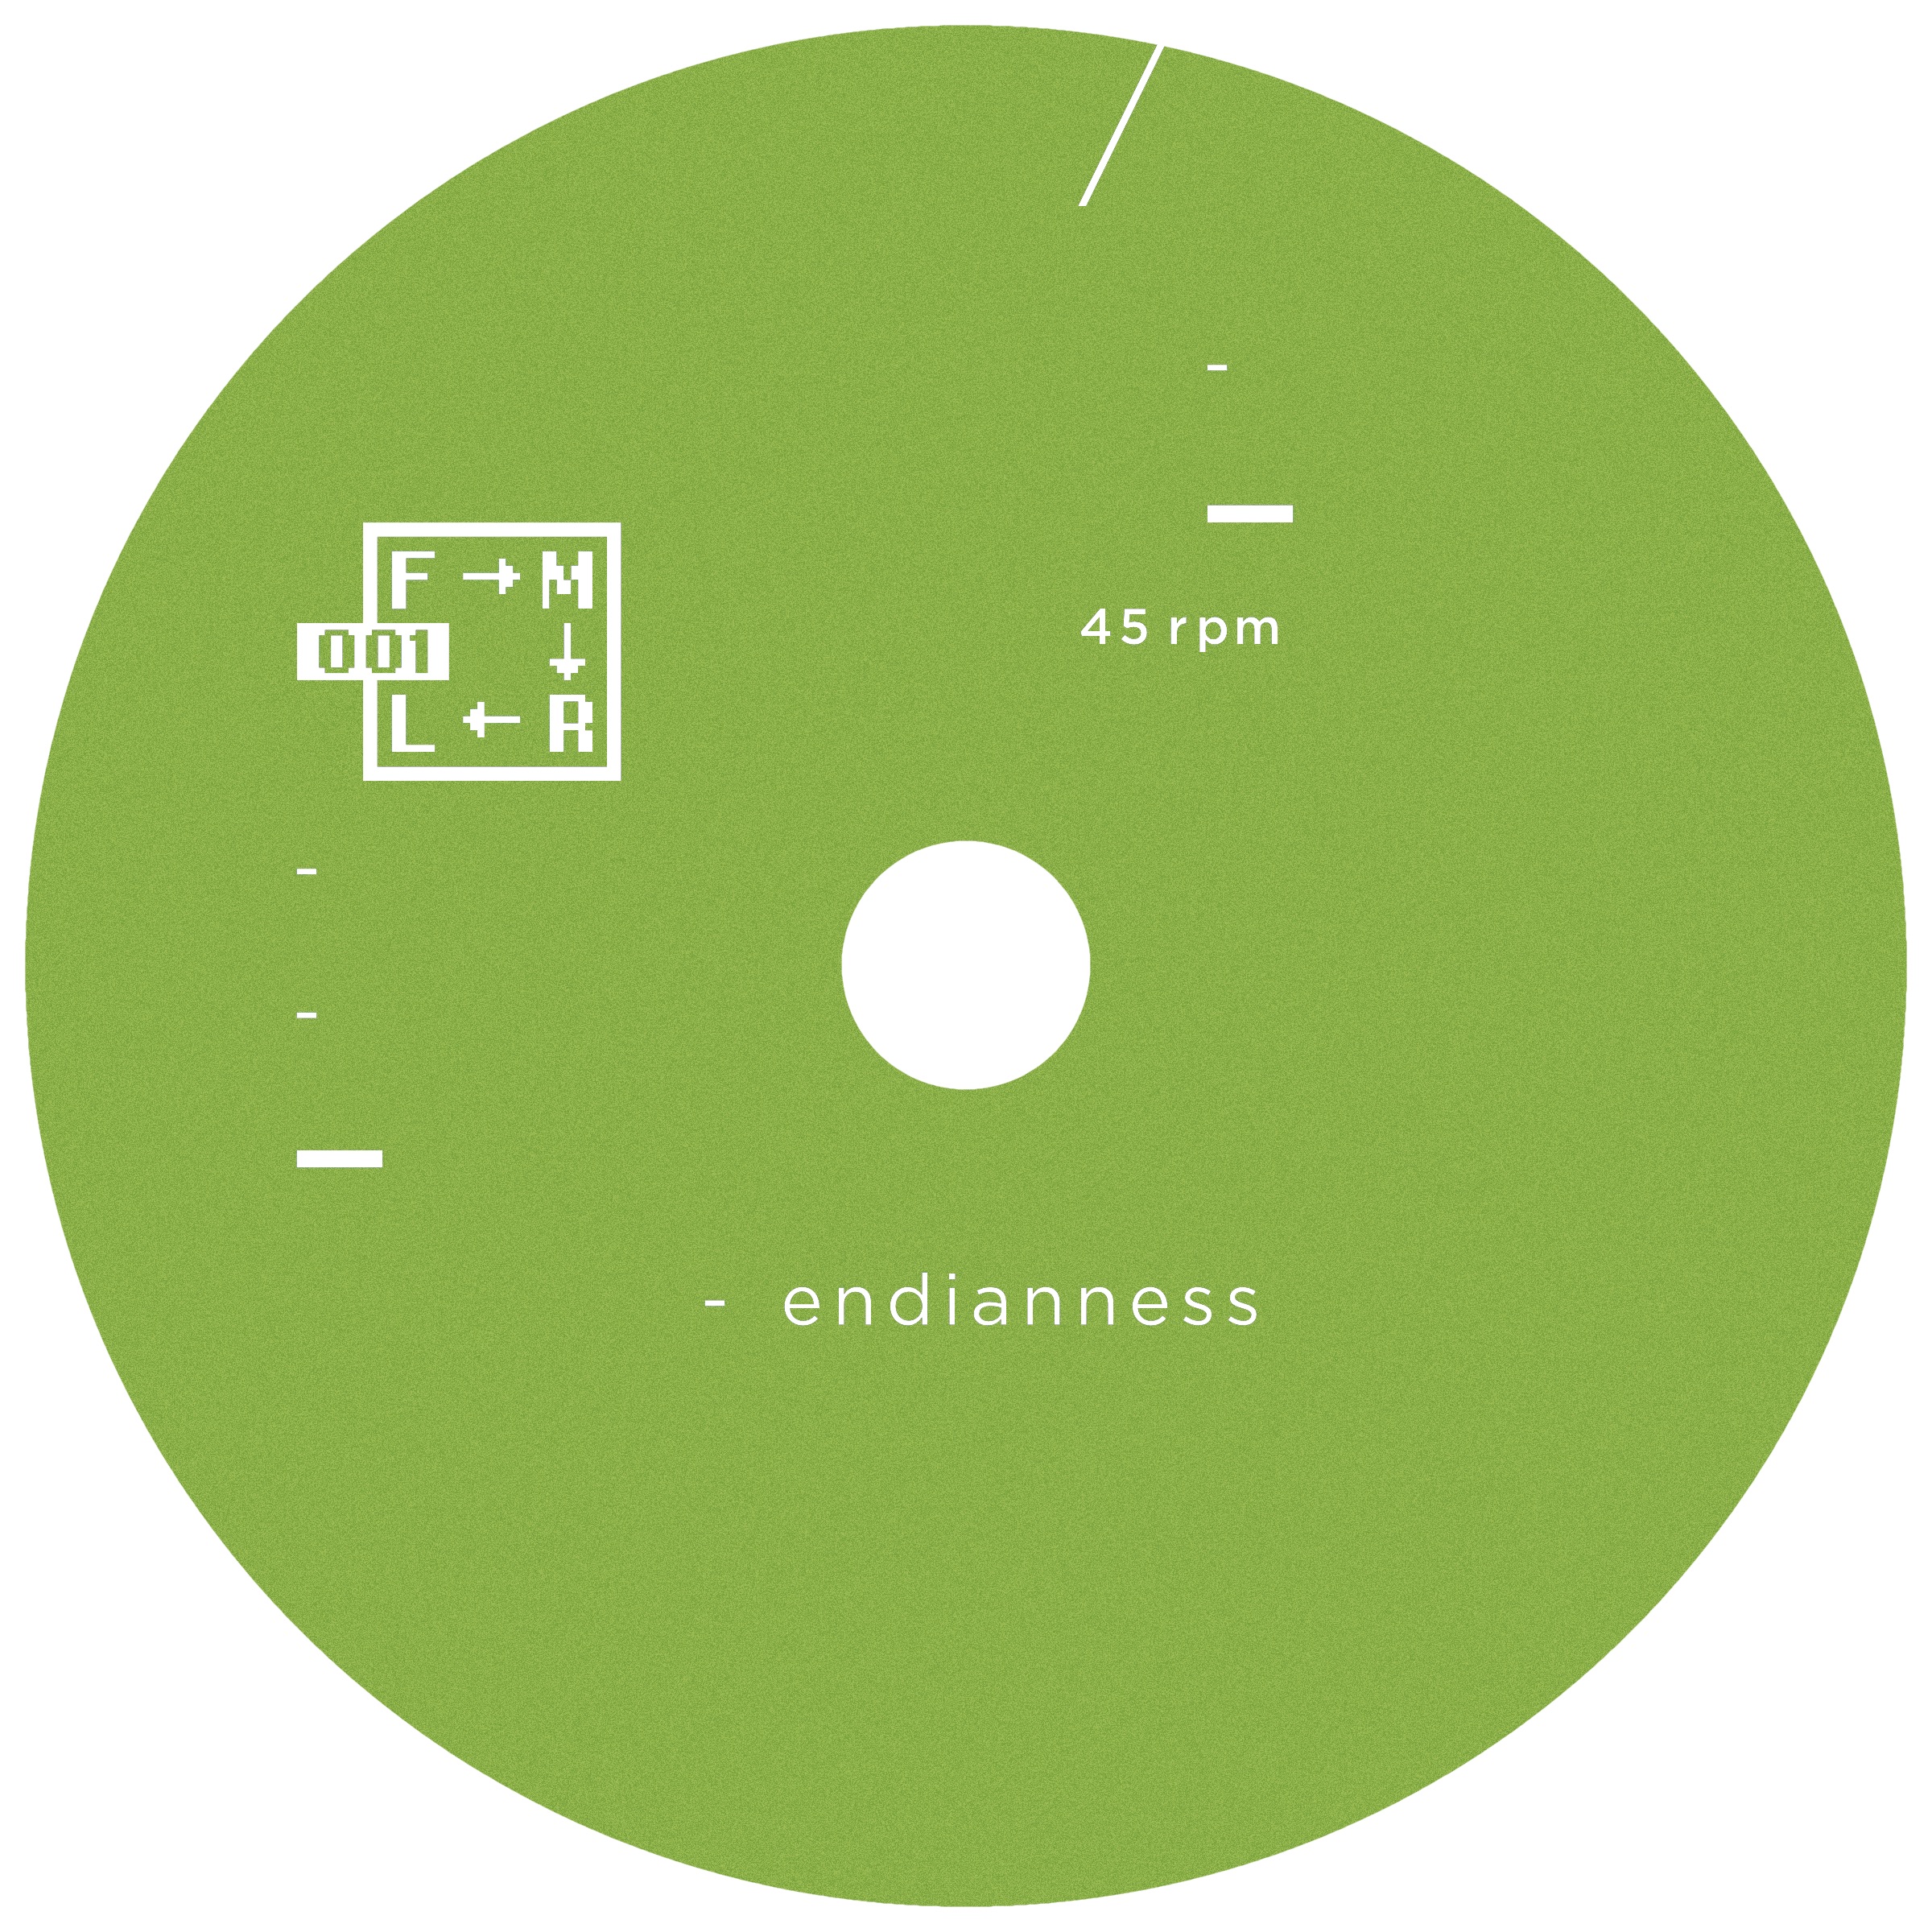 A1. endianness